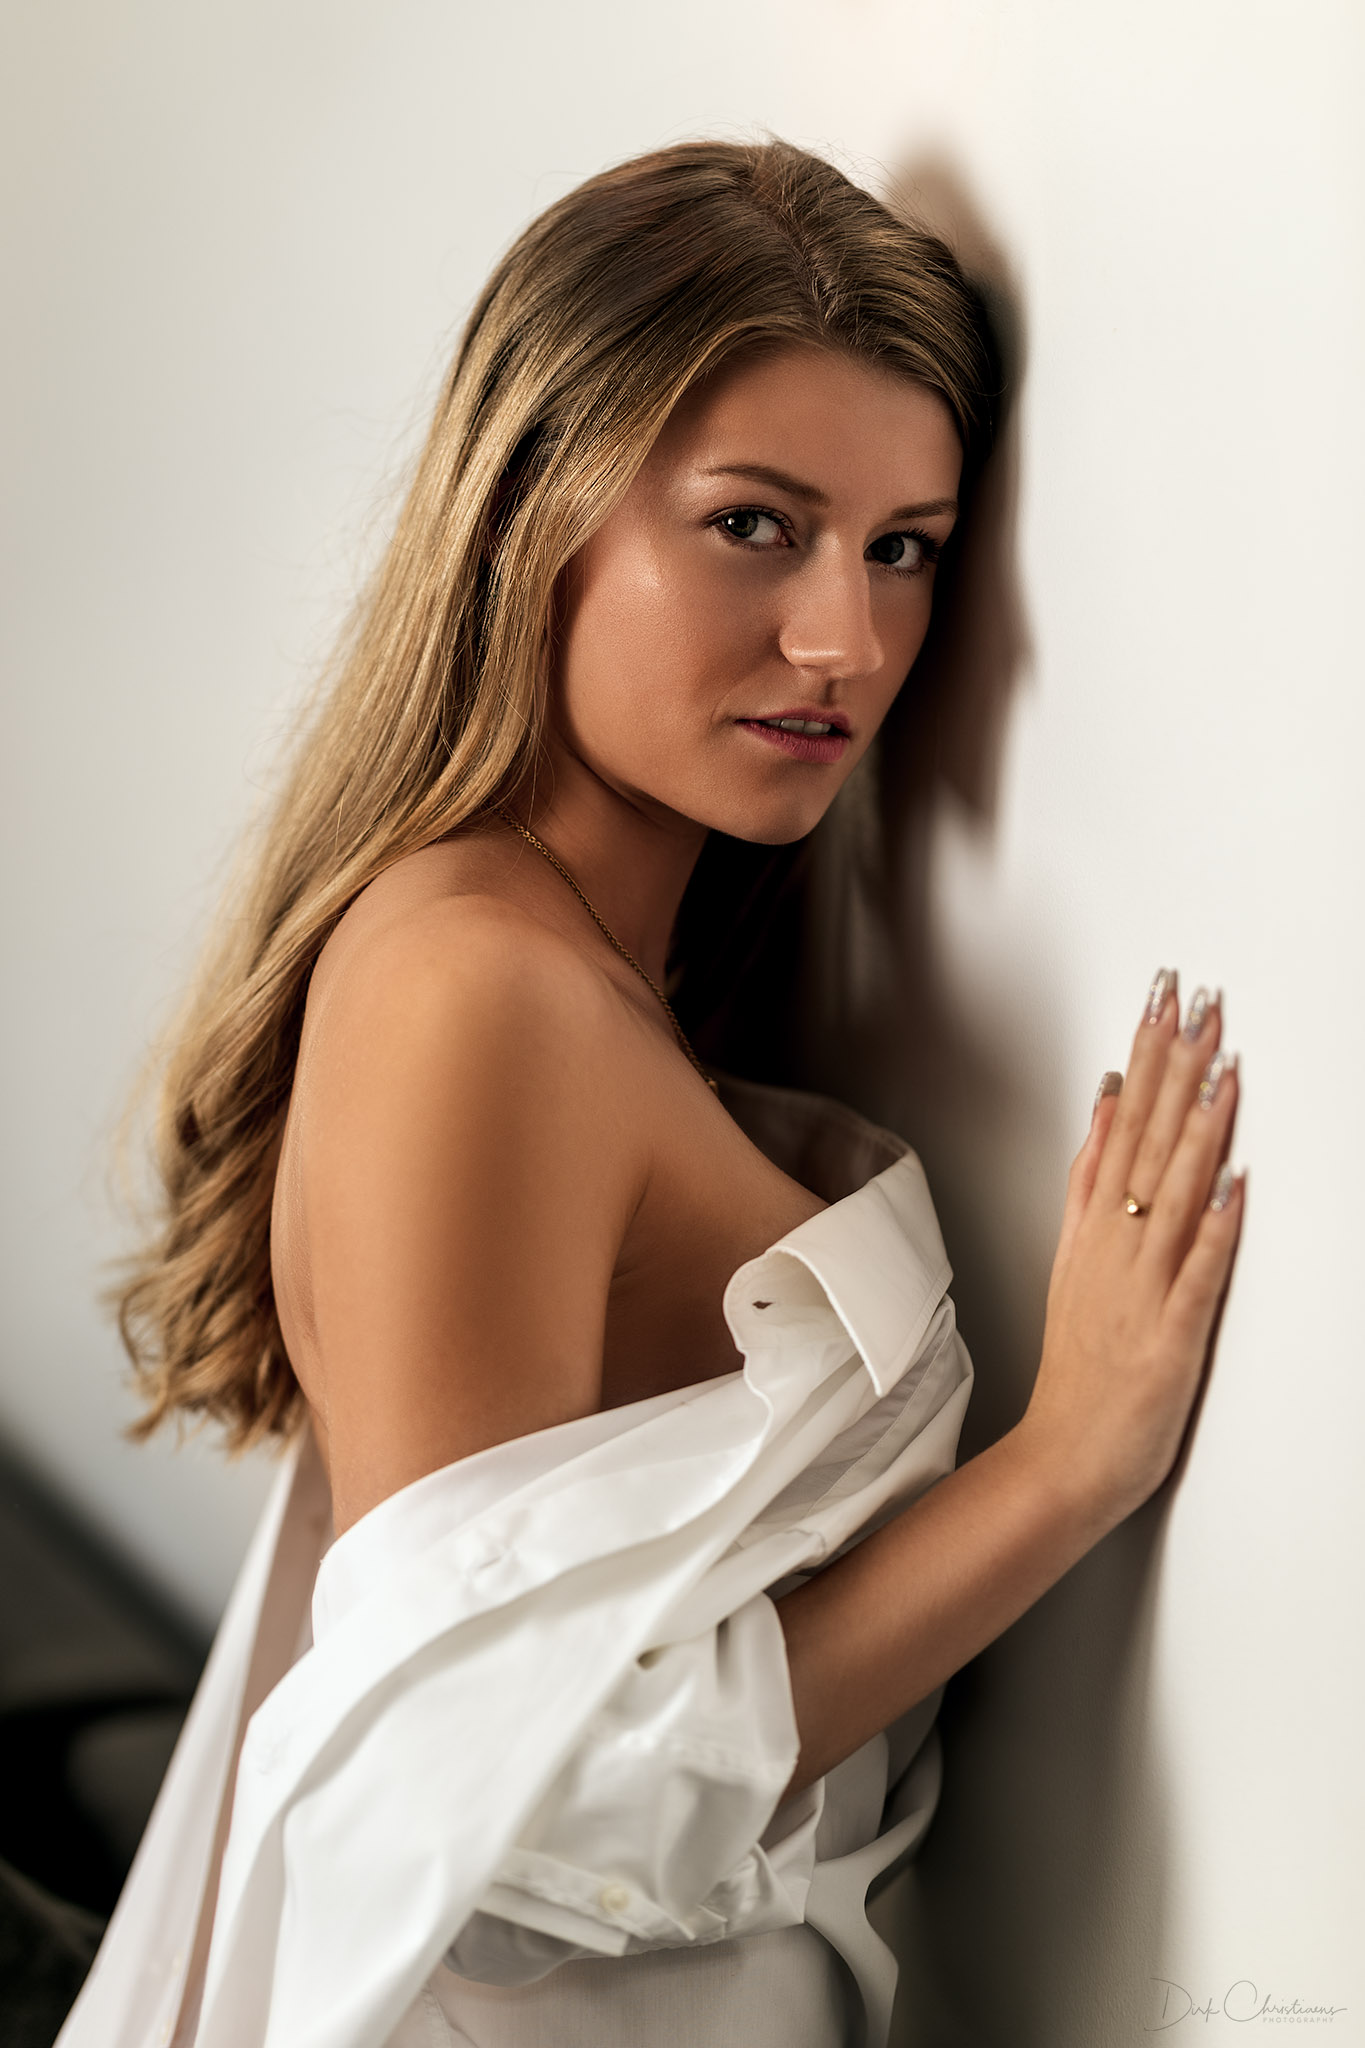 Evelyne Minnaert, model from Belgium at a boudoir photoshoot